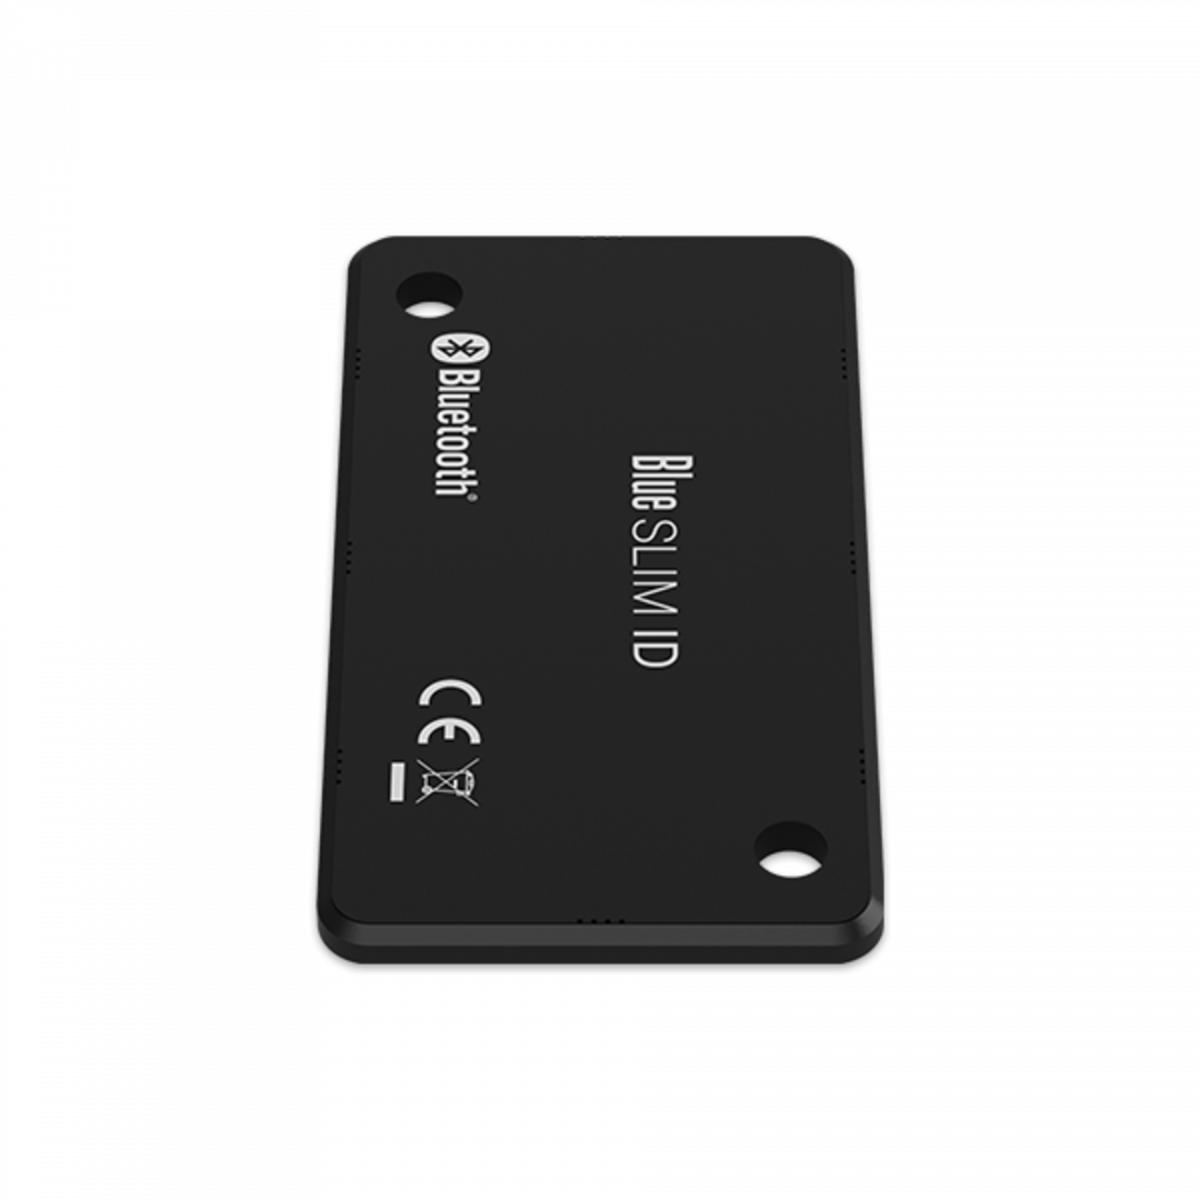 ELA BLUE SLIM ID датчик-маяк с поддержкой Bluetooth